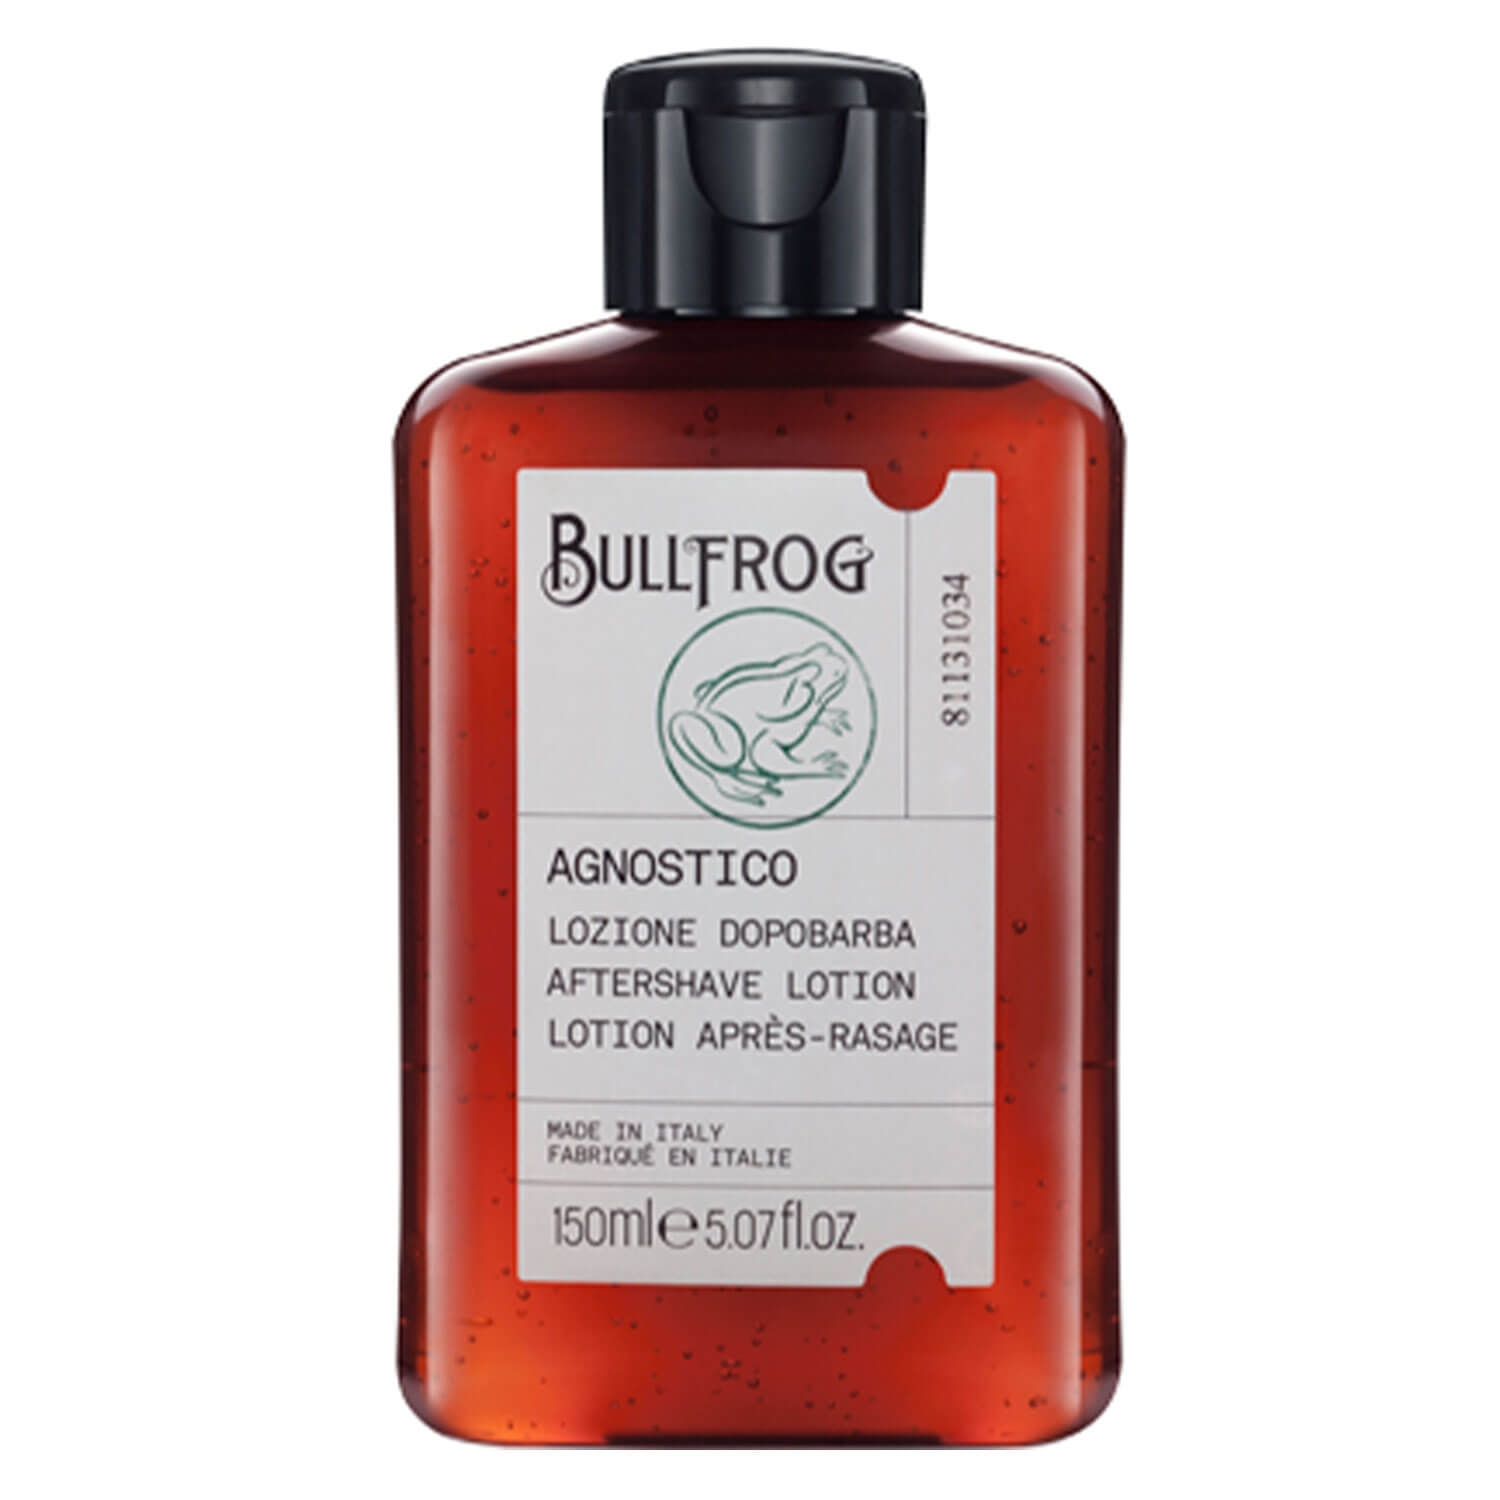 Produktbild von BULLFROG - Agnostico Aftershave Lotion